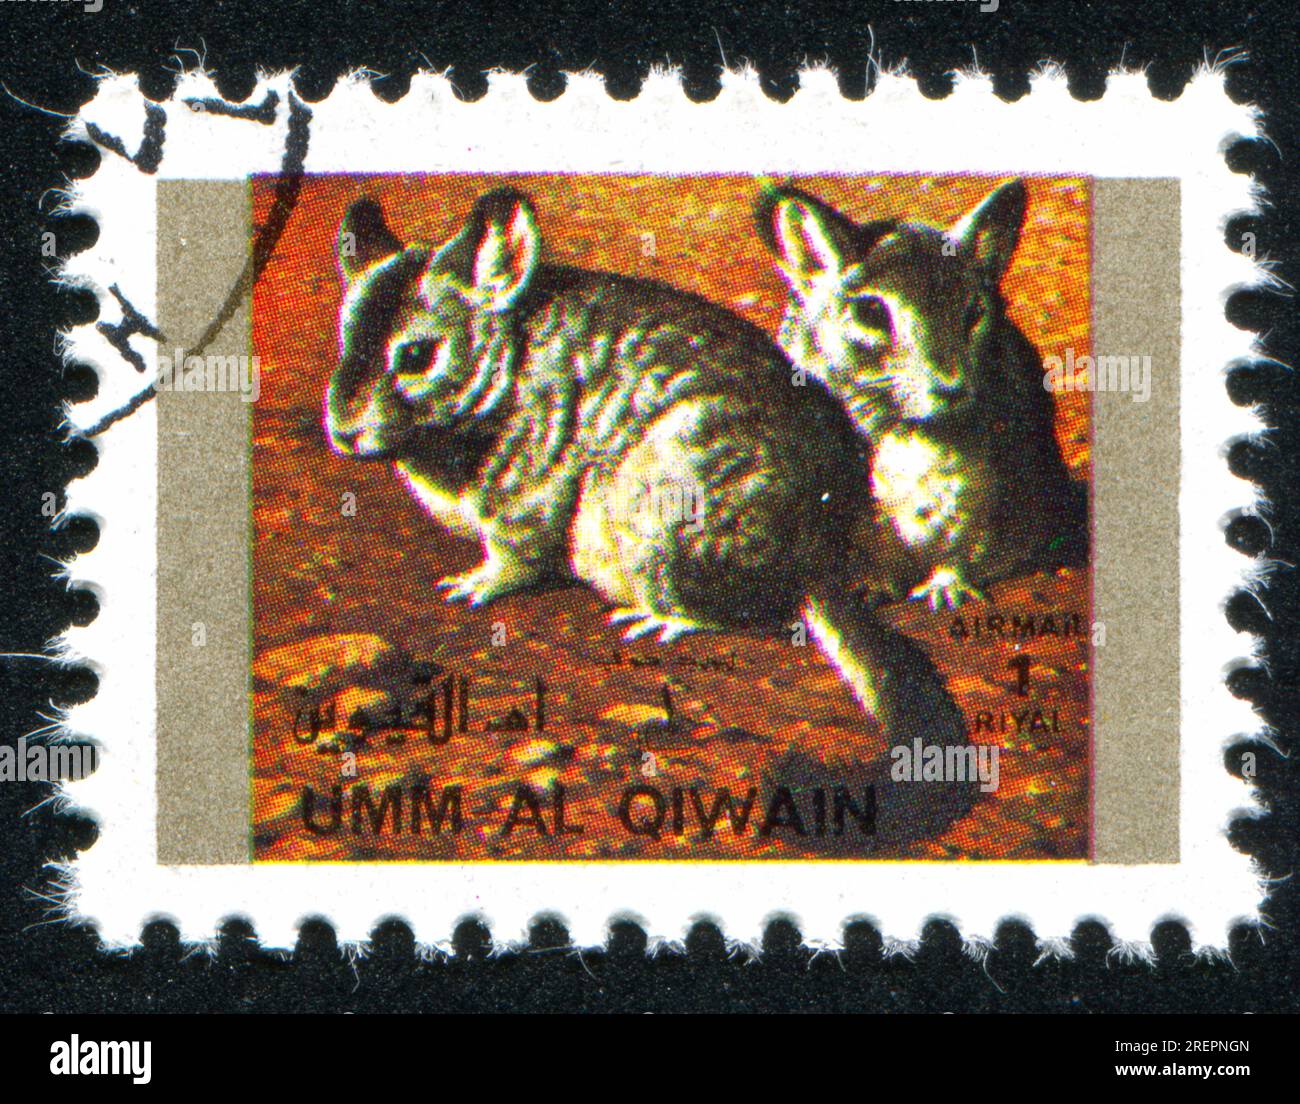 UMM AL-QUWAIN - CIRCA 1972: stamp printed by Umm al-Quwain, shows Chinchillas, circa 1972 Stock Photo